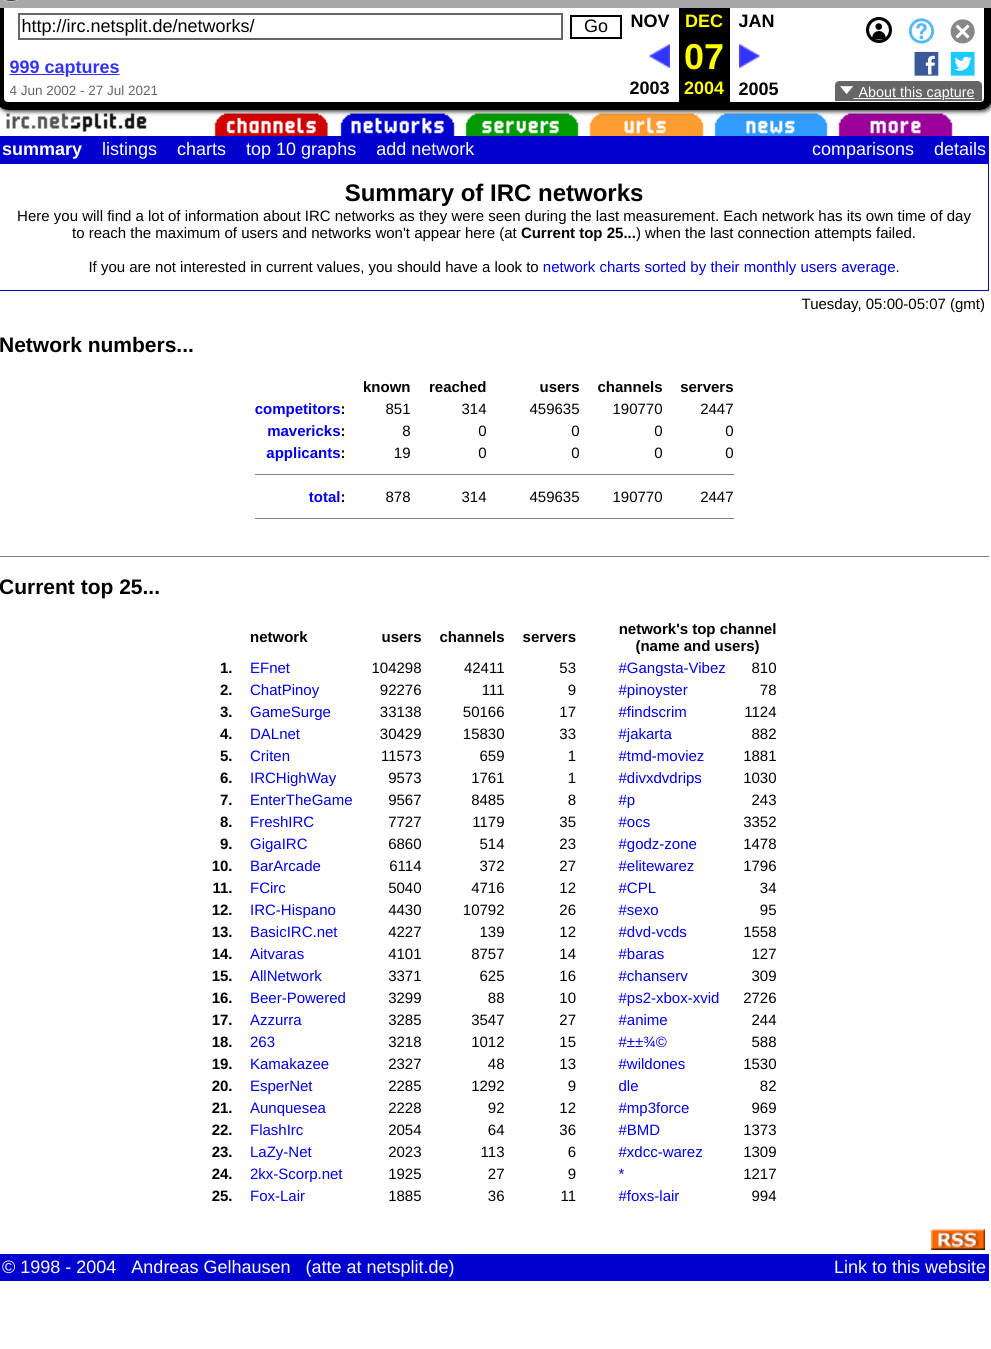 netsplit.de networks survey for 2004